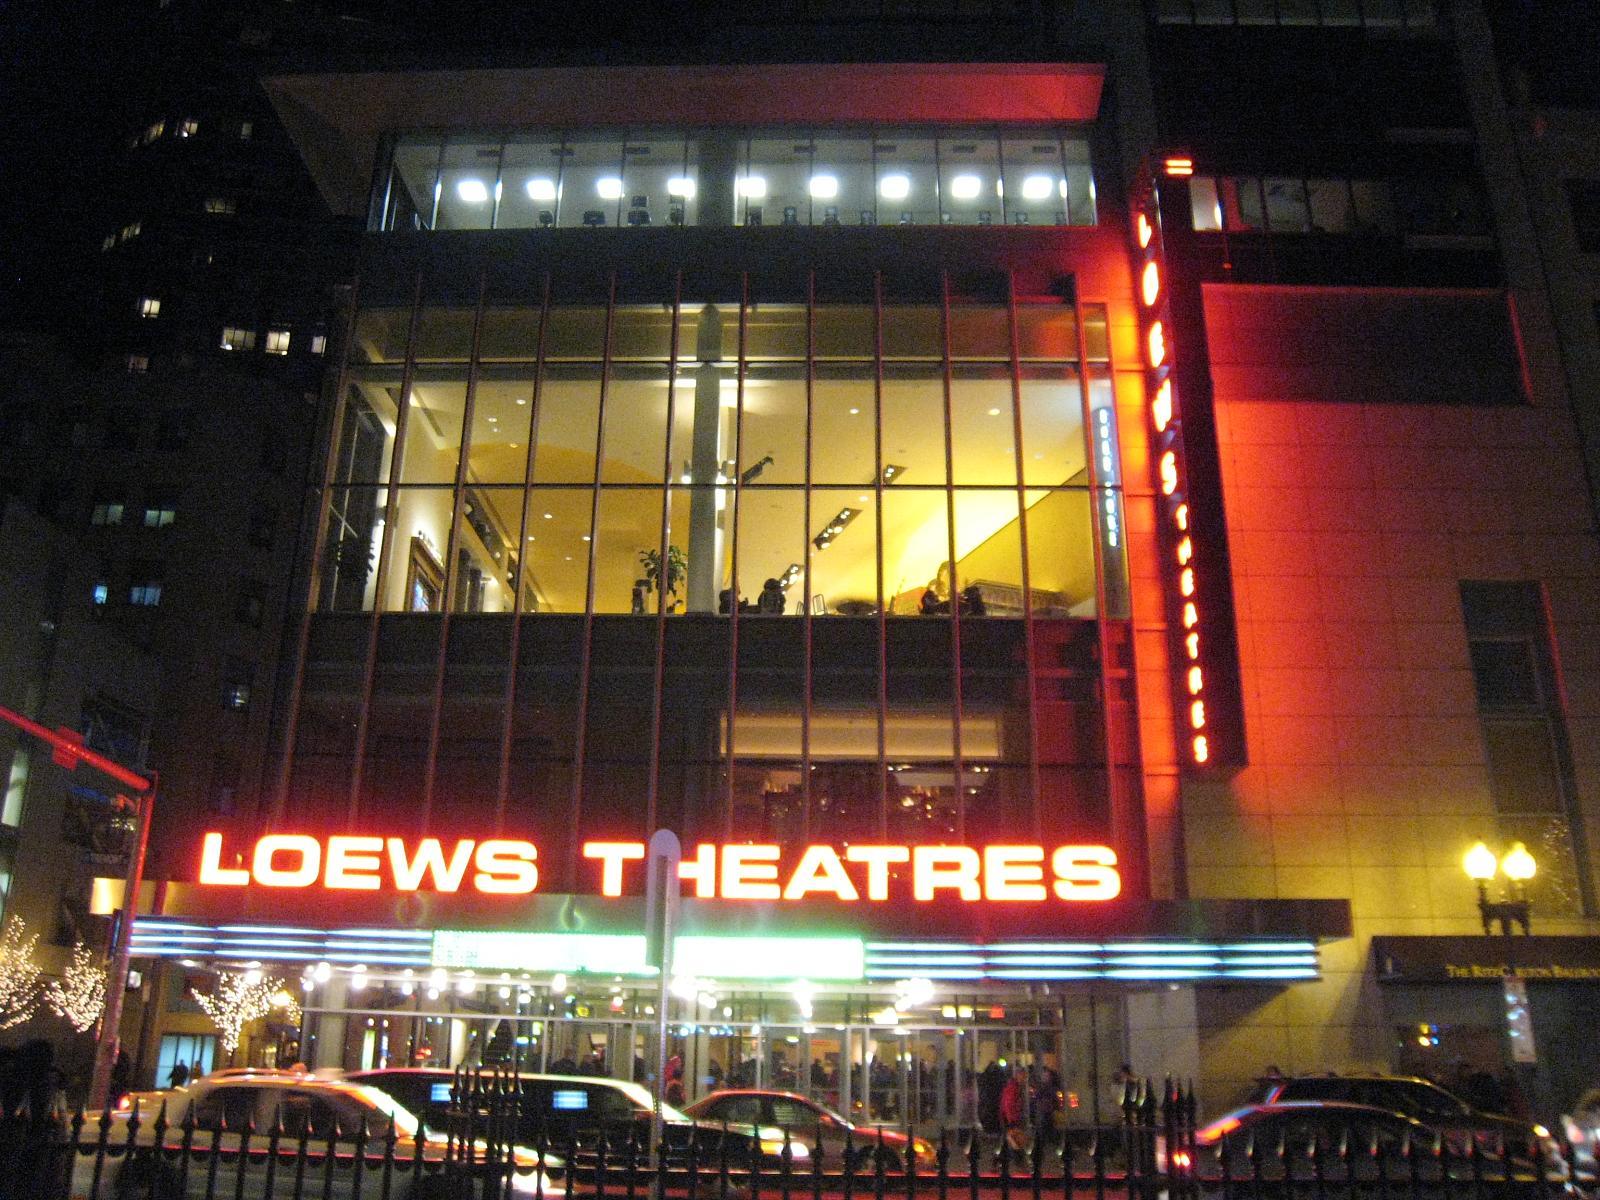 AMC Boston Common 19 - Boston, Massachusetts 02111 - AMC Theatres